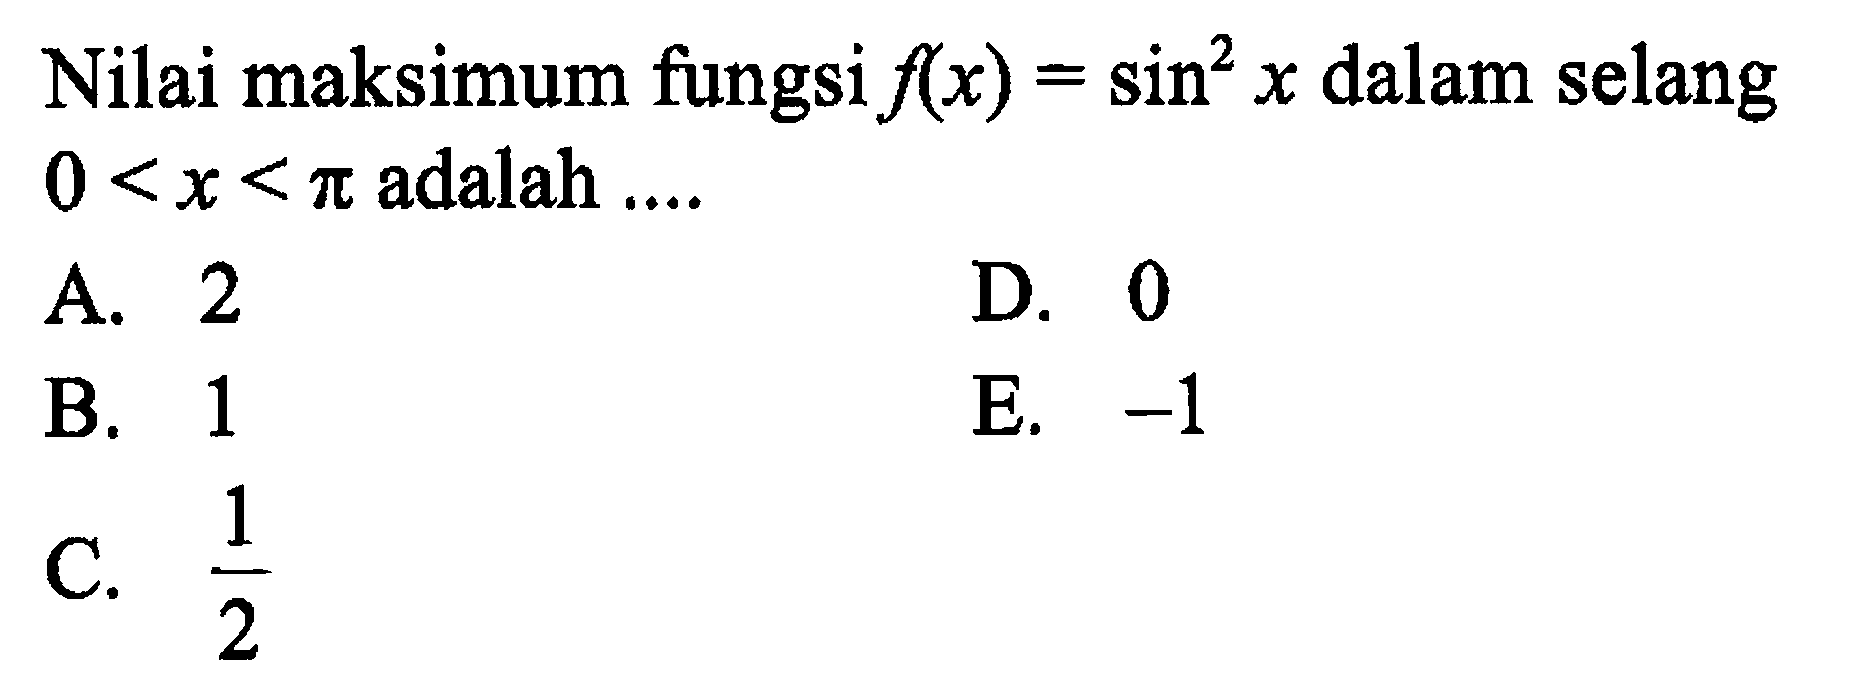 Nilai maksimum fungsi f(x) = sin^2 x dalam selang 0<x<pi adalah....